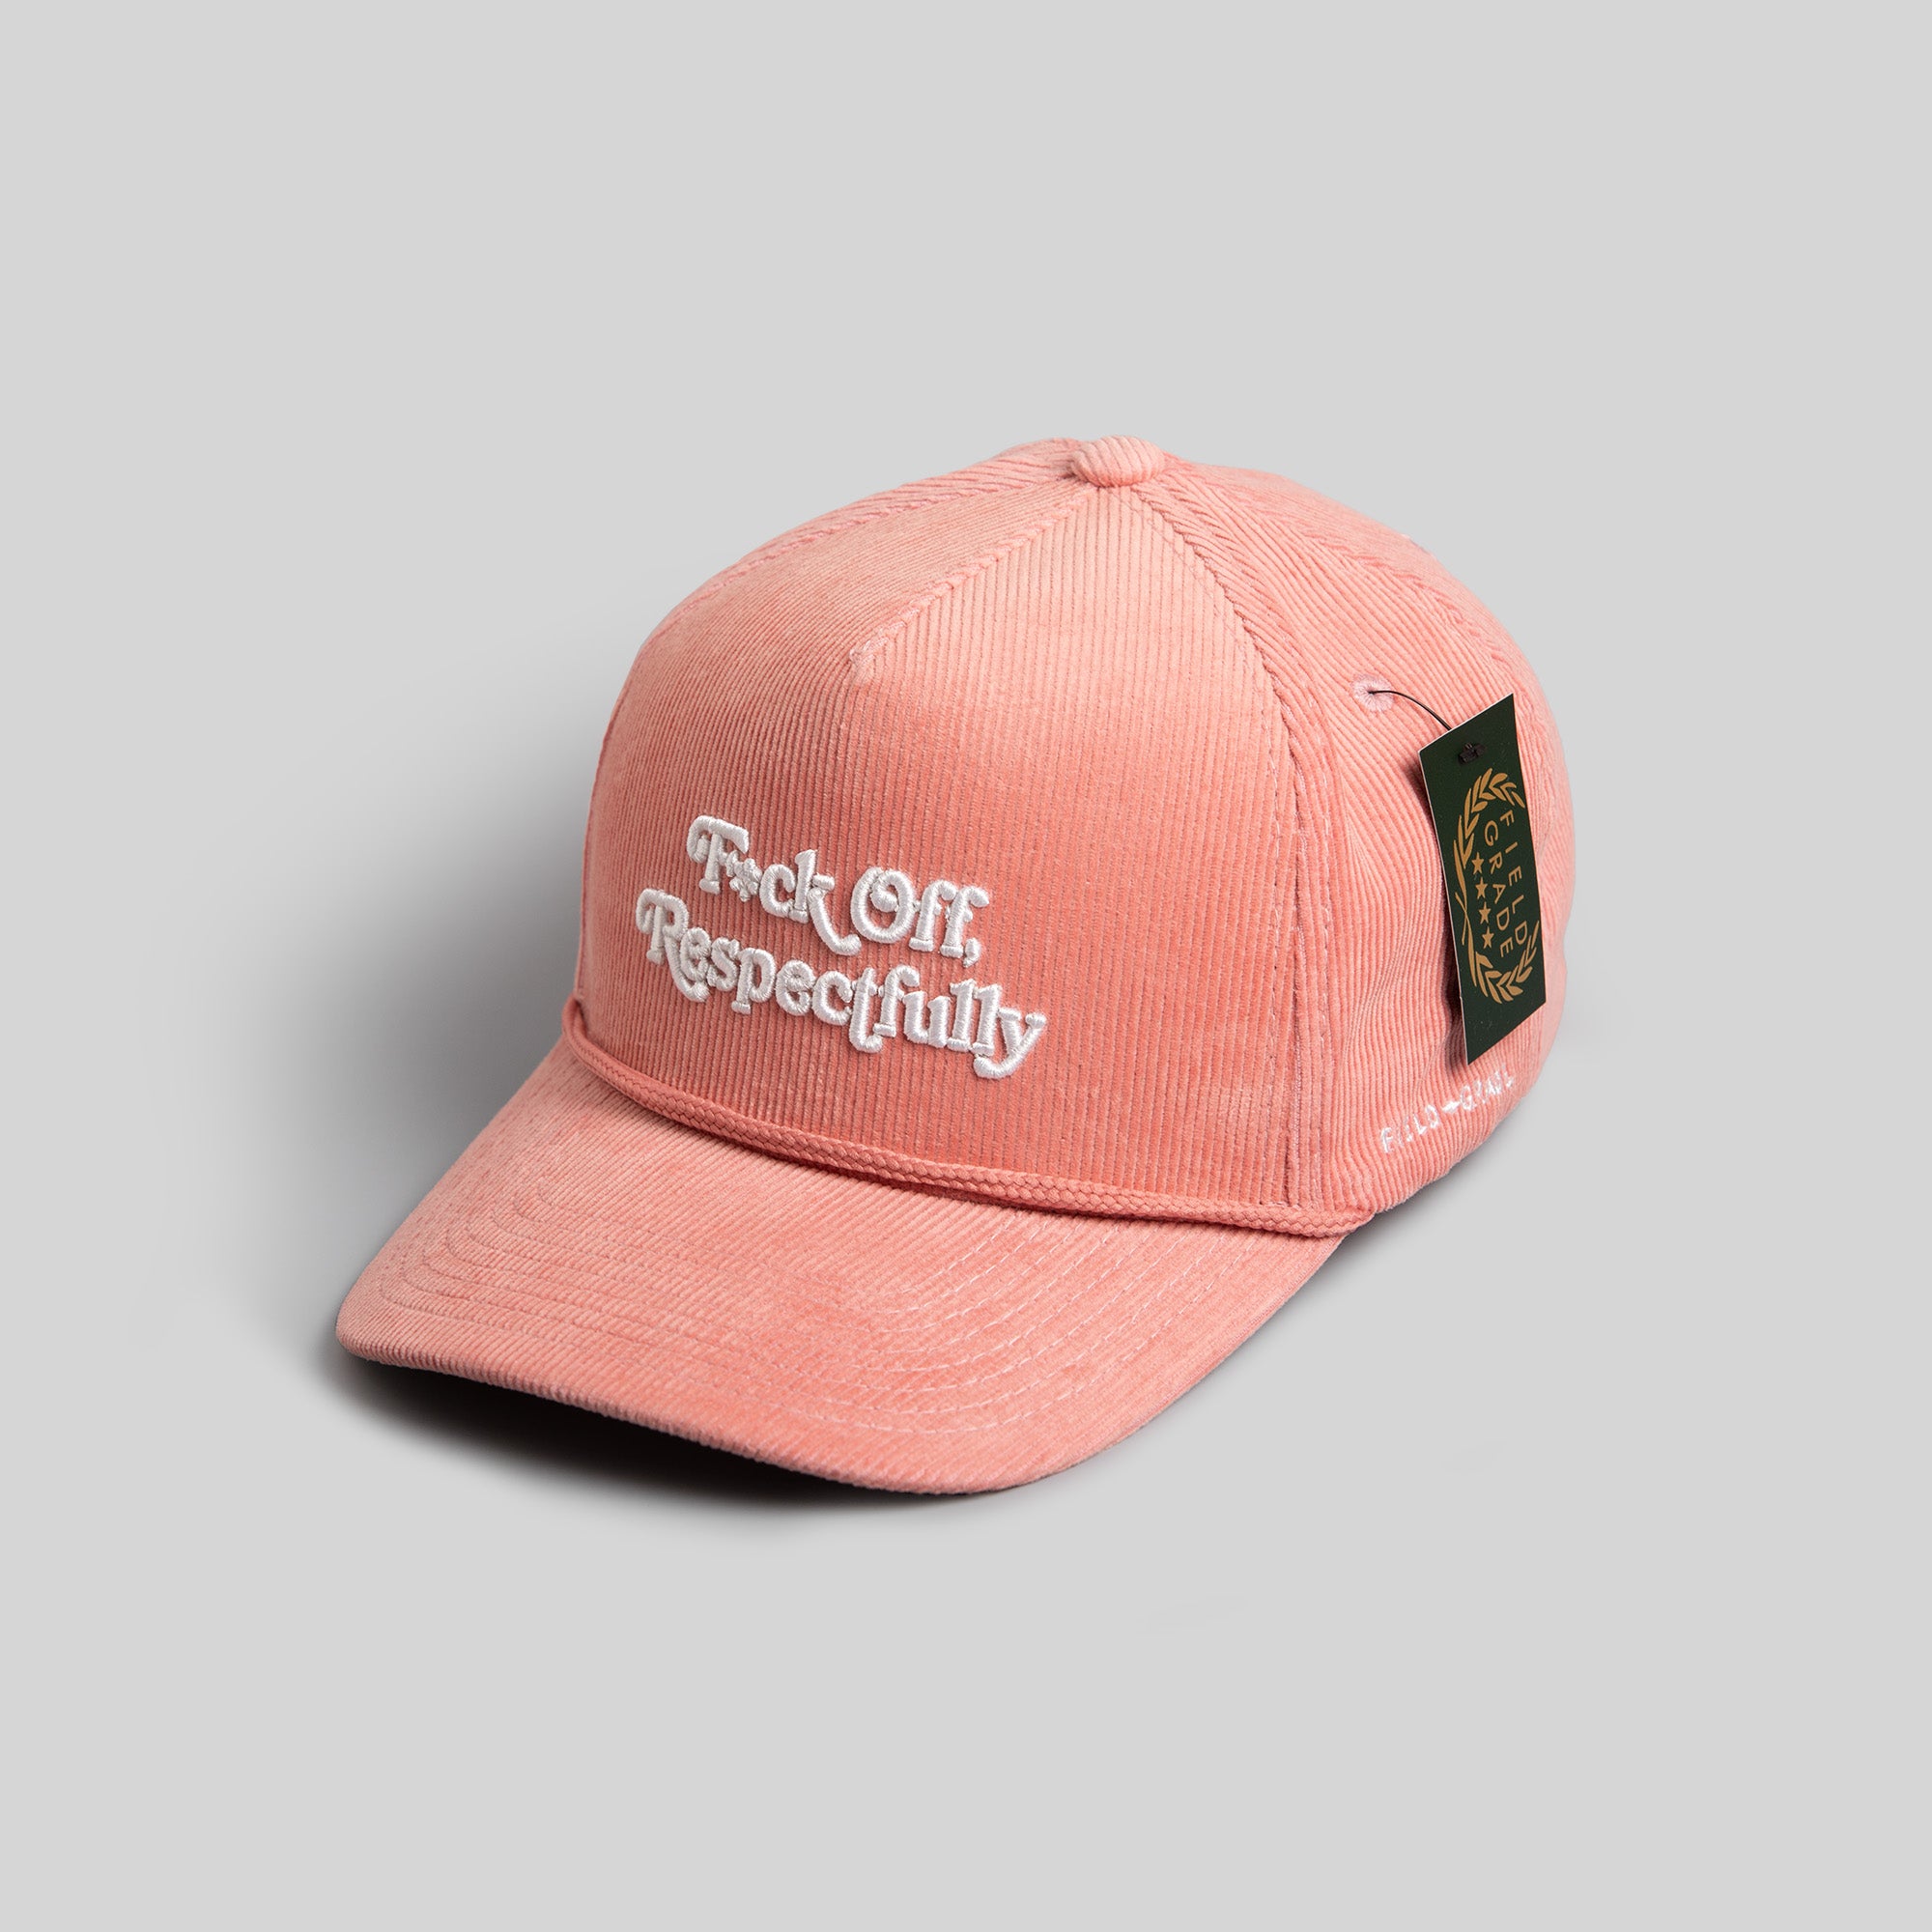 RESPECTFULLY ROSE PINK CORDUROY TRUCKER HAT